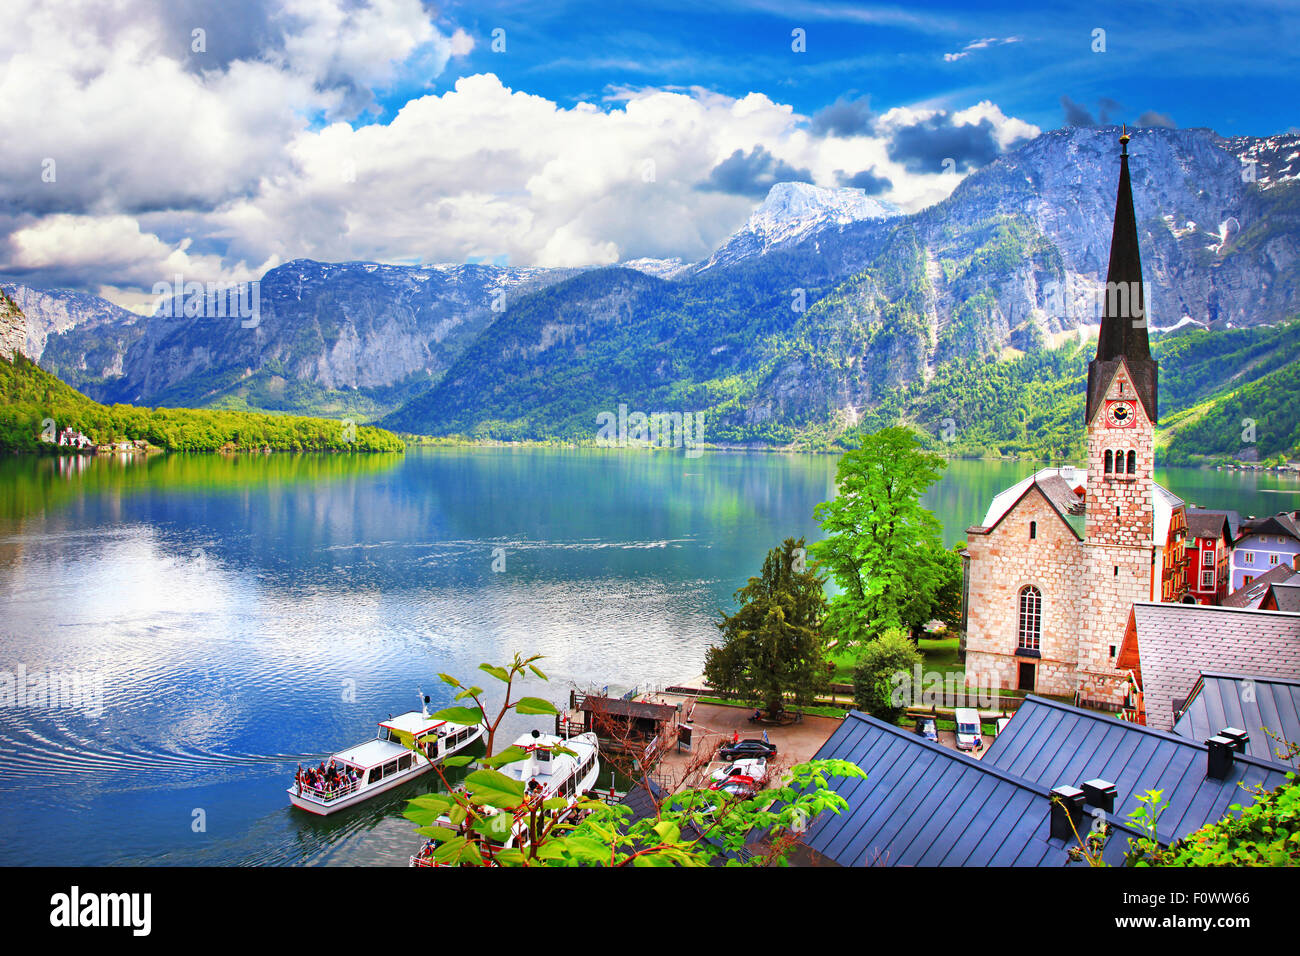 Picturesque village and lake Hallstatt, Austria Stock Photo